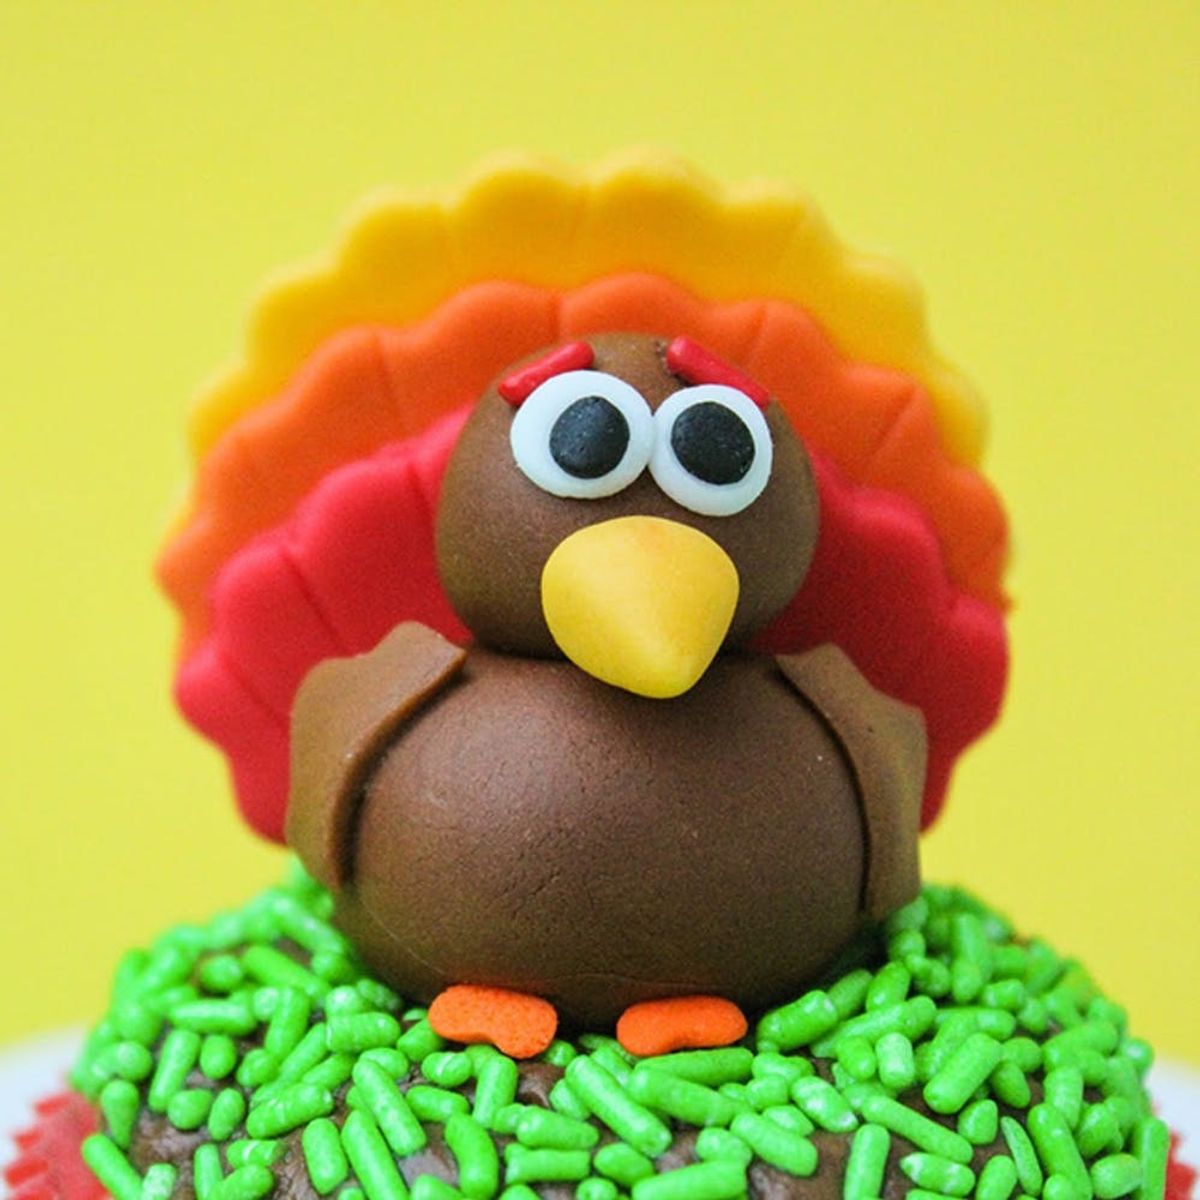 16 Turkey-Inspired Thanksgiving Dessert Recipes the Kids Will Love